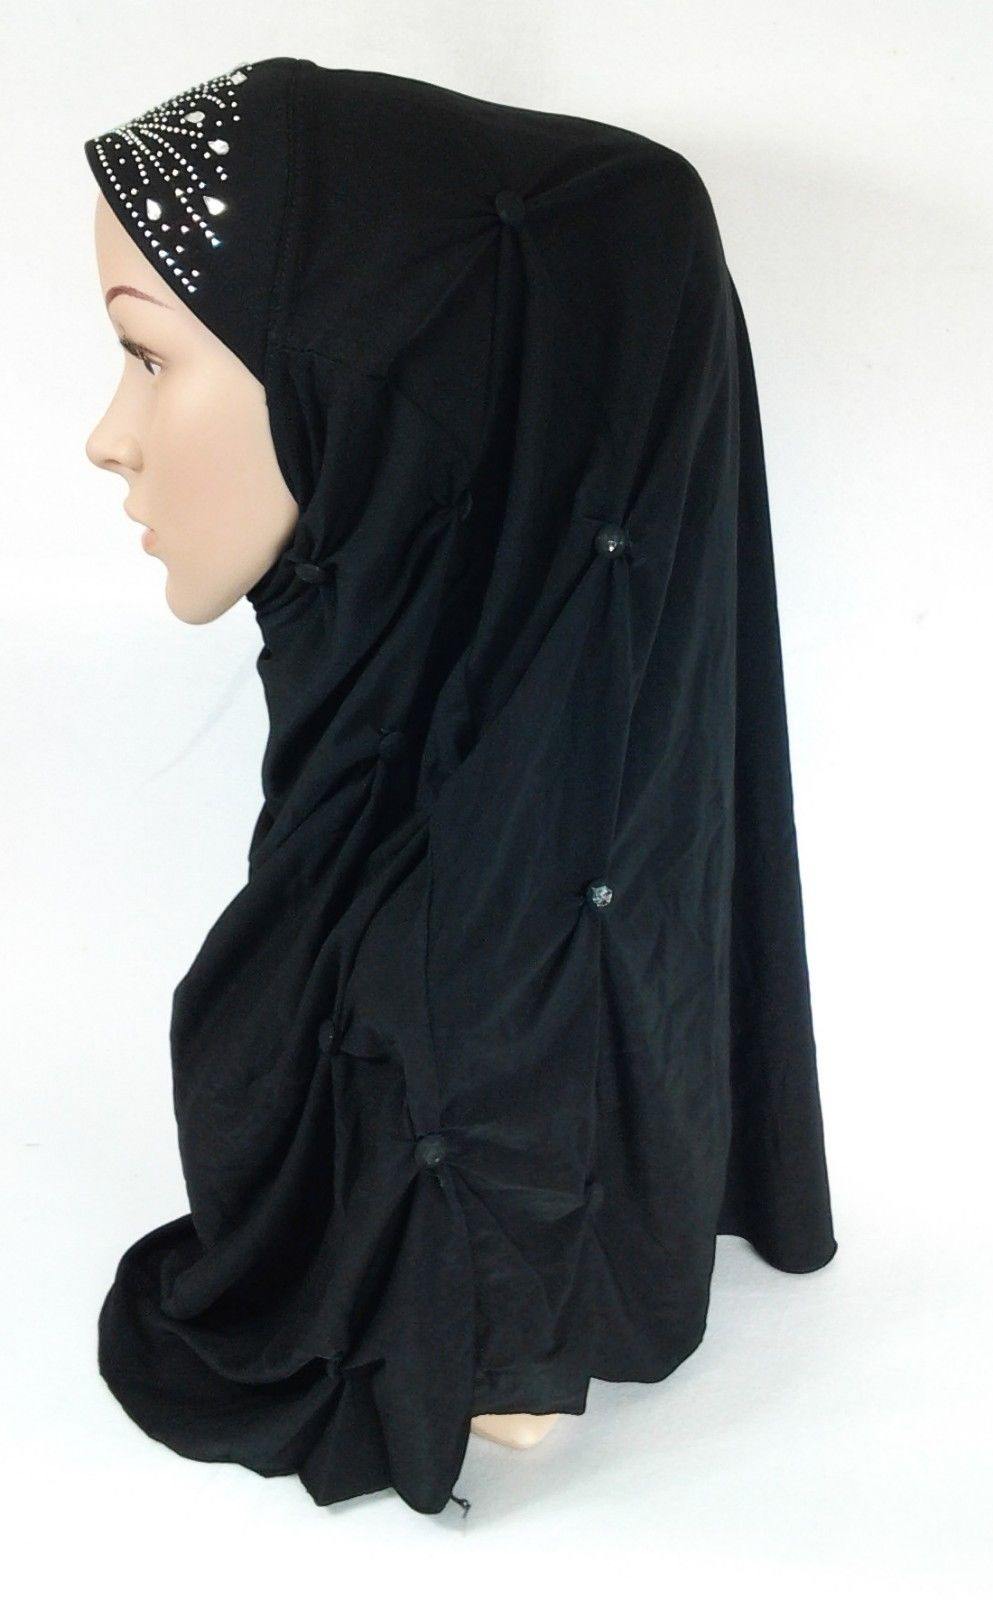 Crystal Hemp Over Chest Hijab Muslim Scarf Islamic Amira Hijab 12-Color - Arabian Shopping Zone